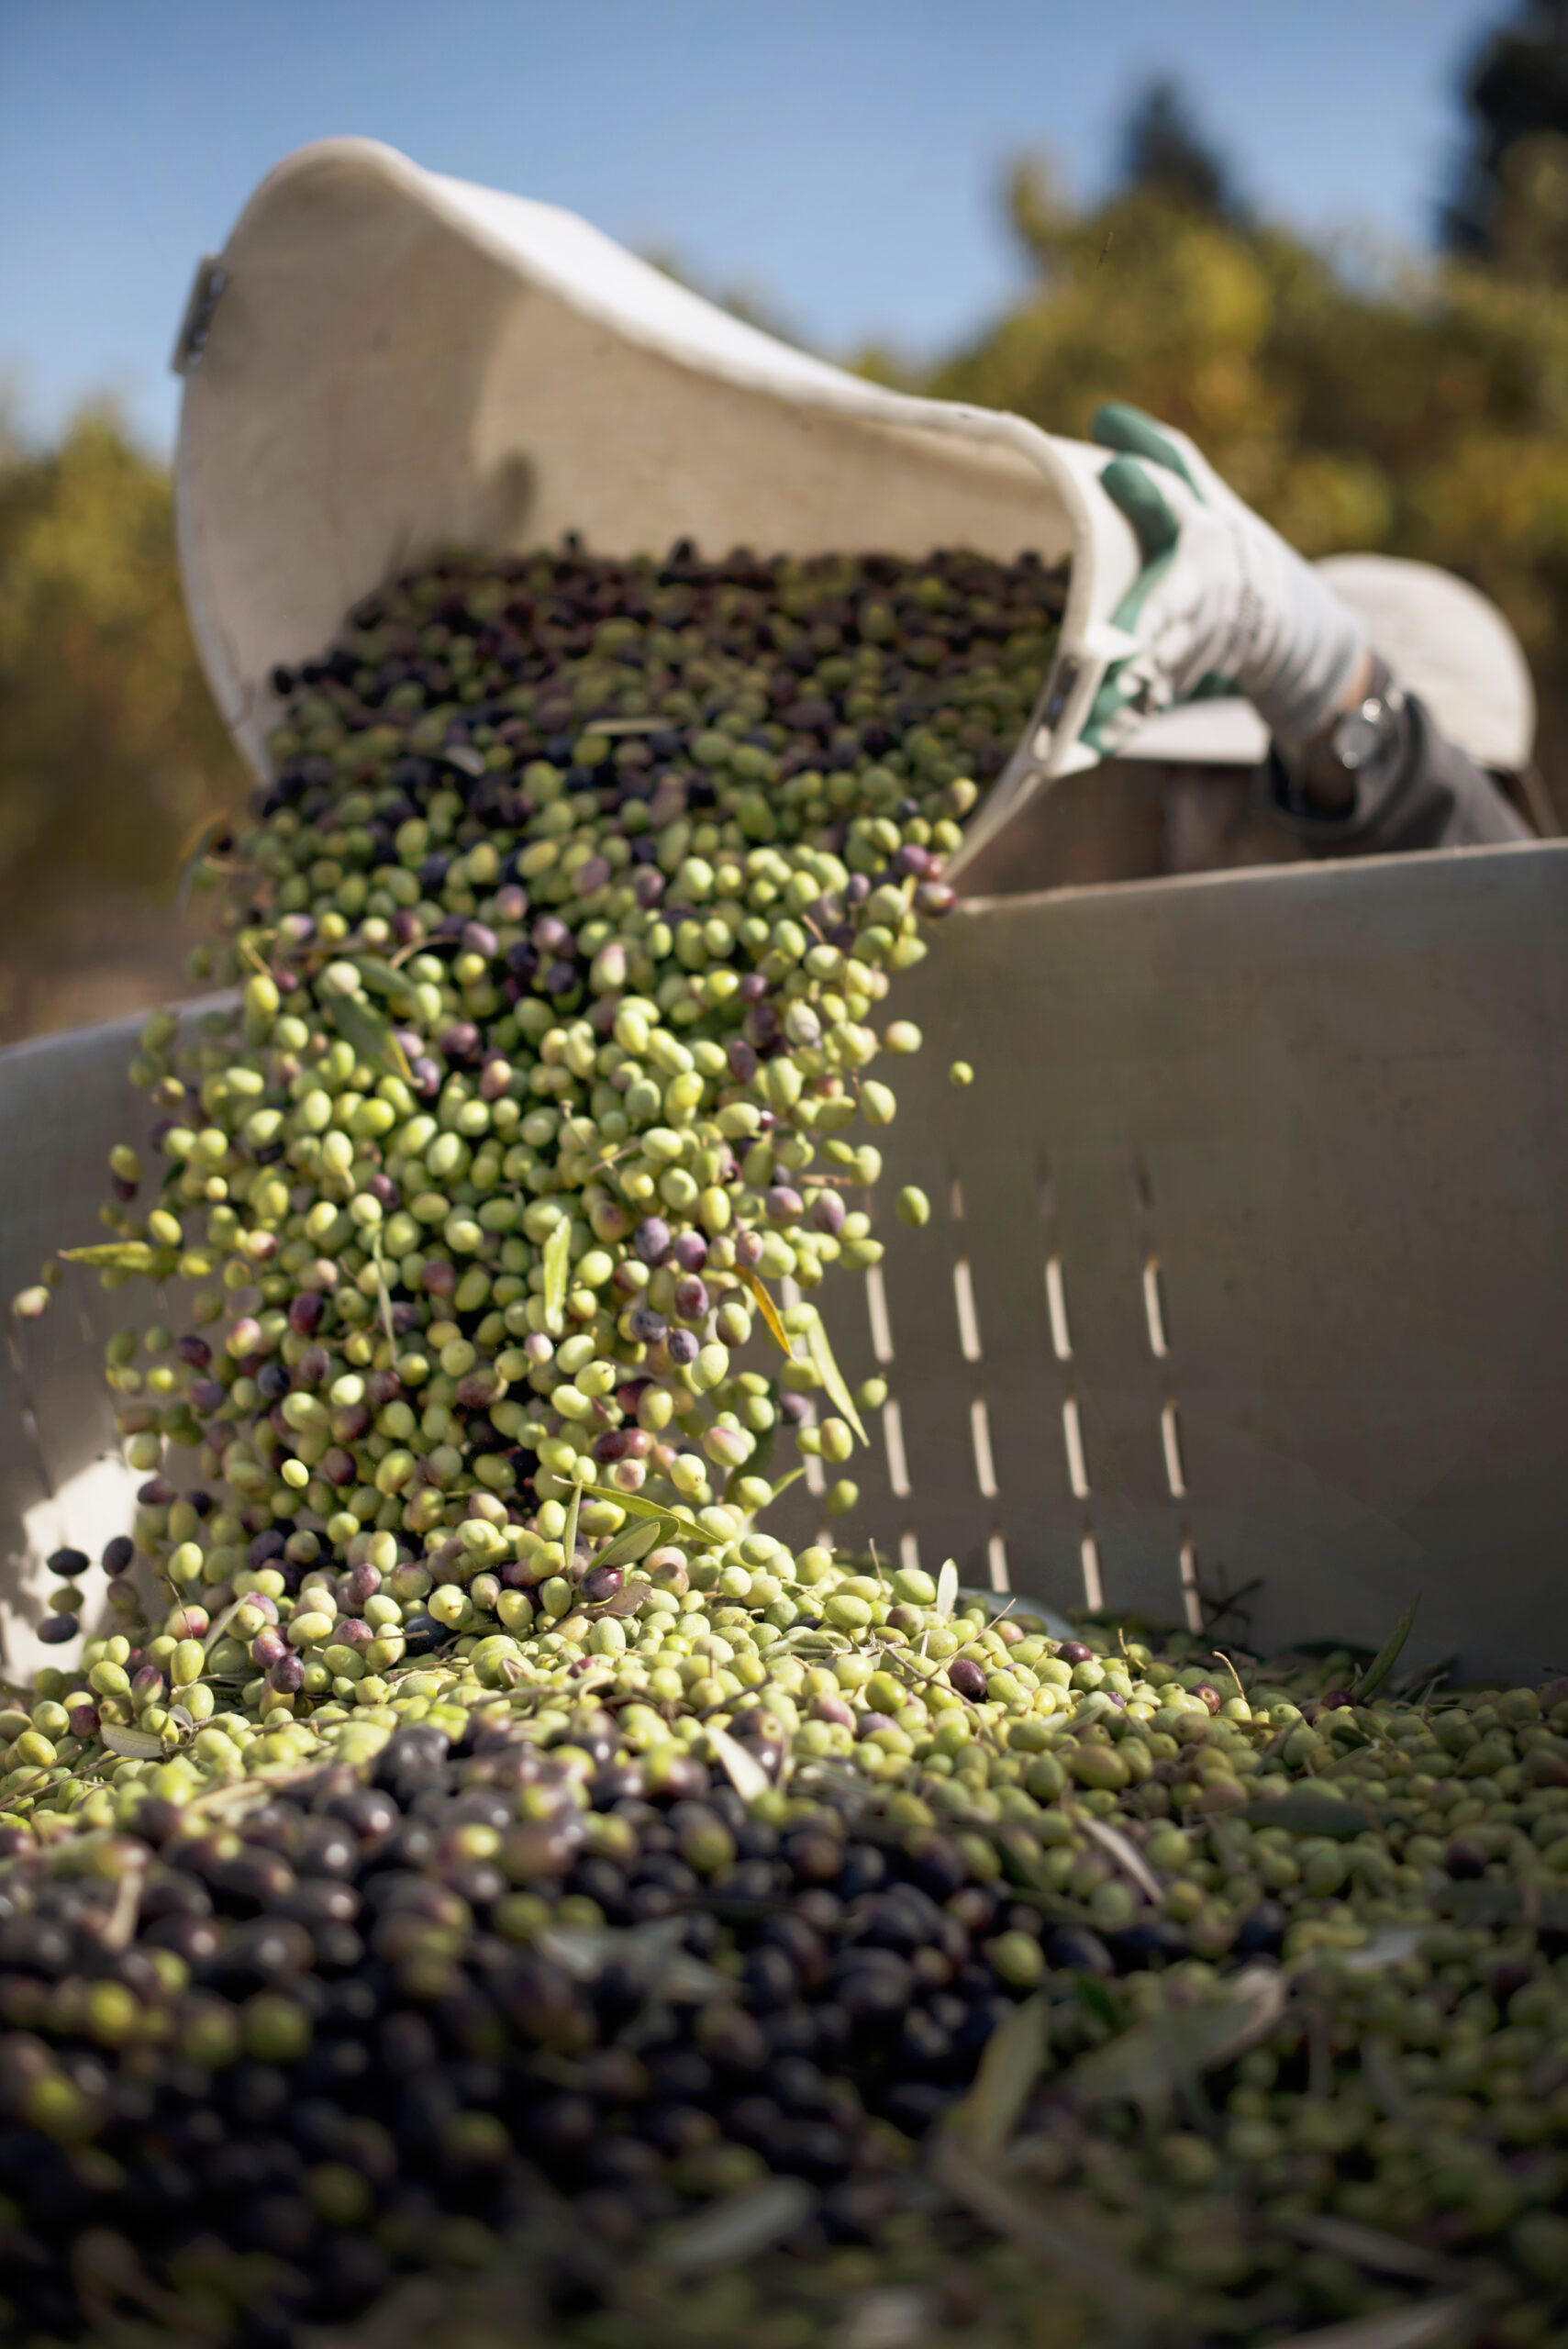 A bin in the back of a pickup truck is filling will olives during olive harvest at Baker Lane Vineyards in Sebastopol, California, November 8, 2018. (Photo: Erik Castro/for Sonoma Magazine)